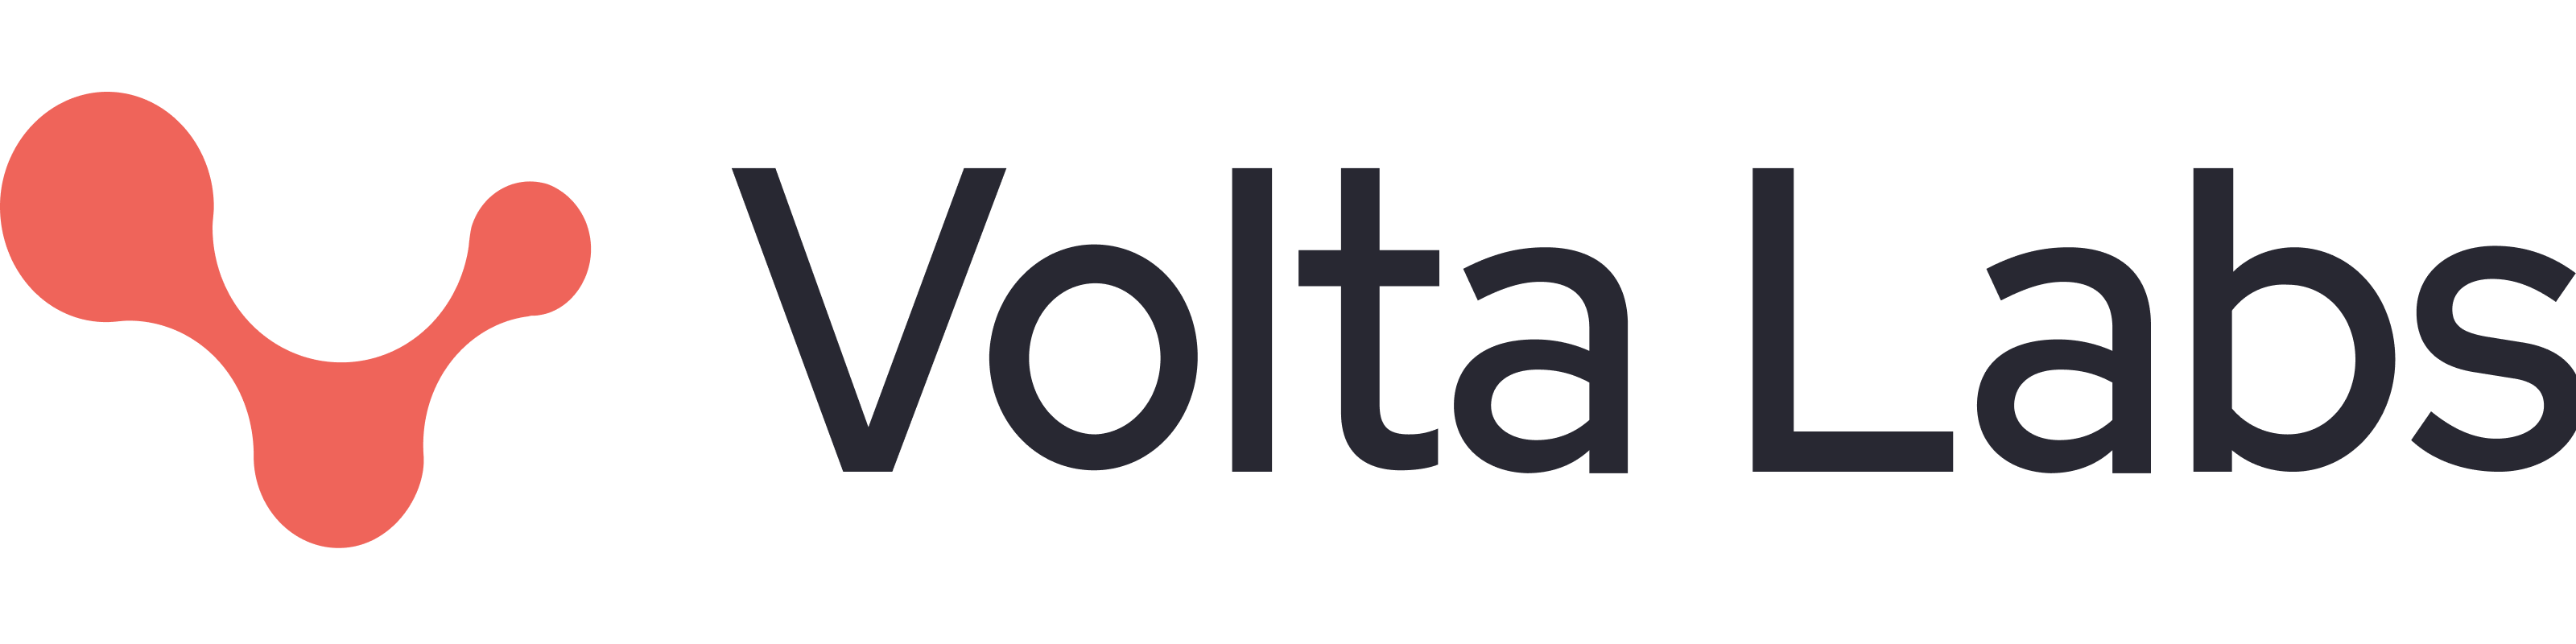 Volta Labs logo